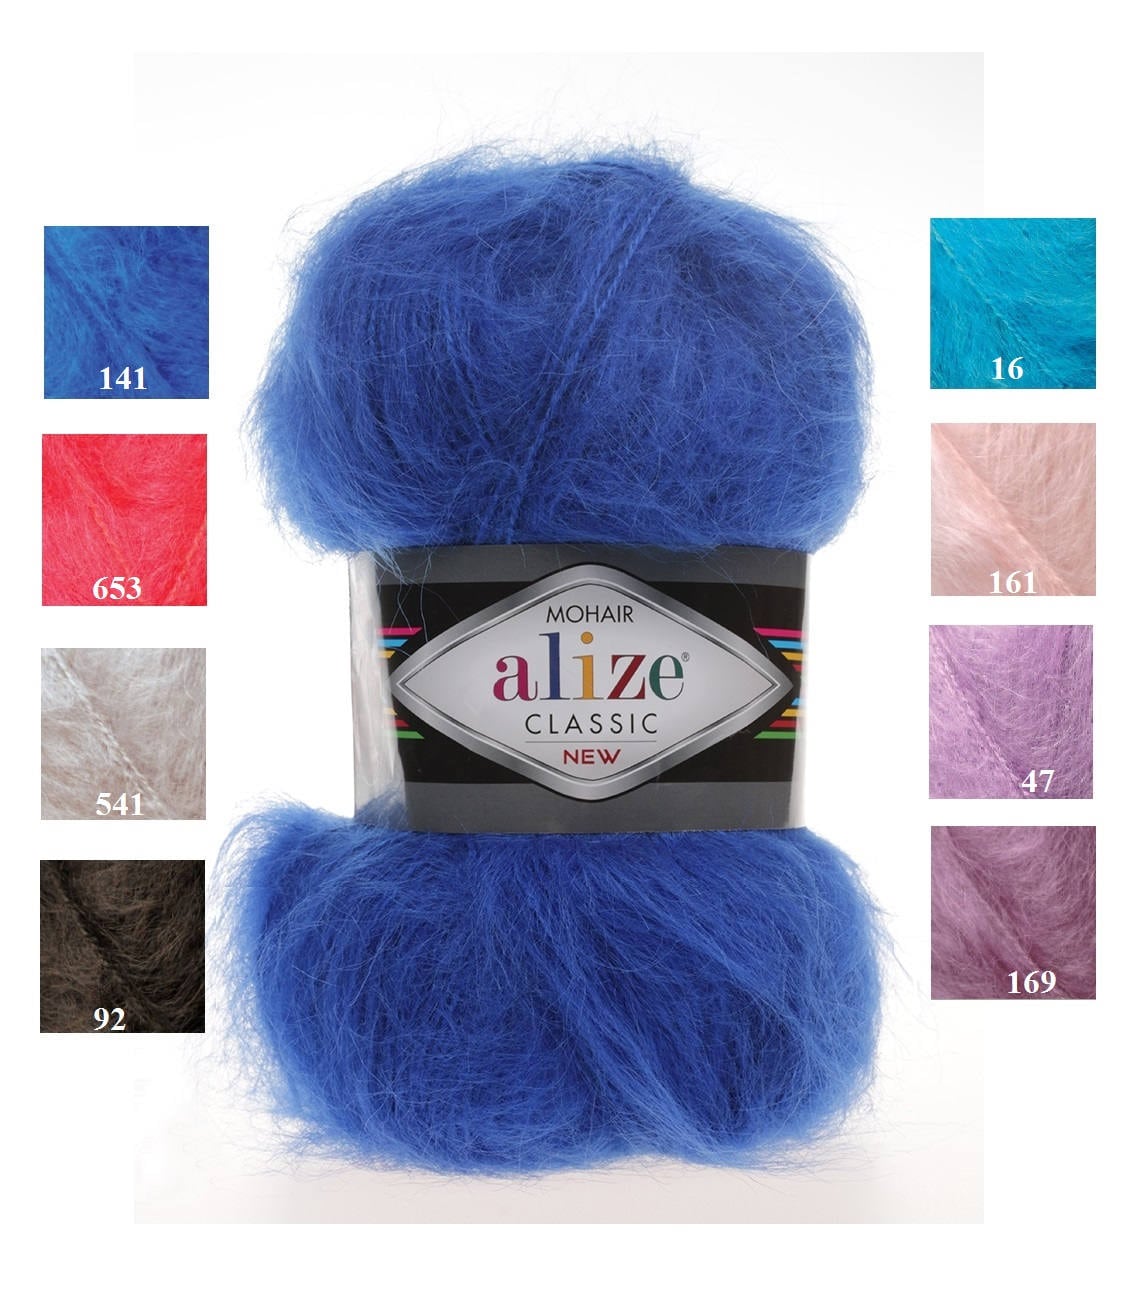 Alize Mohair Classic New, Blend Mohair Yarn, Winter Soft Knitting Crochet Knit Yarn For Hat Scarf, Acrylic Aran